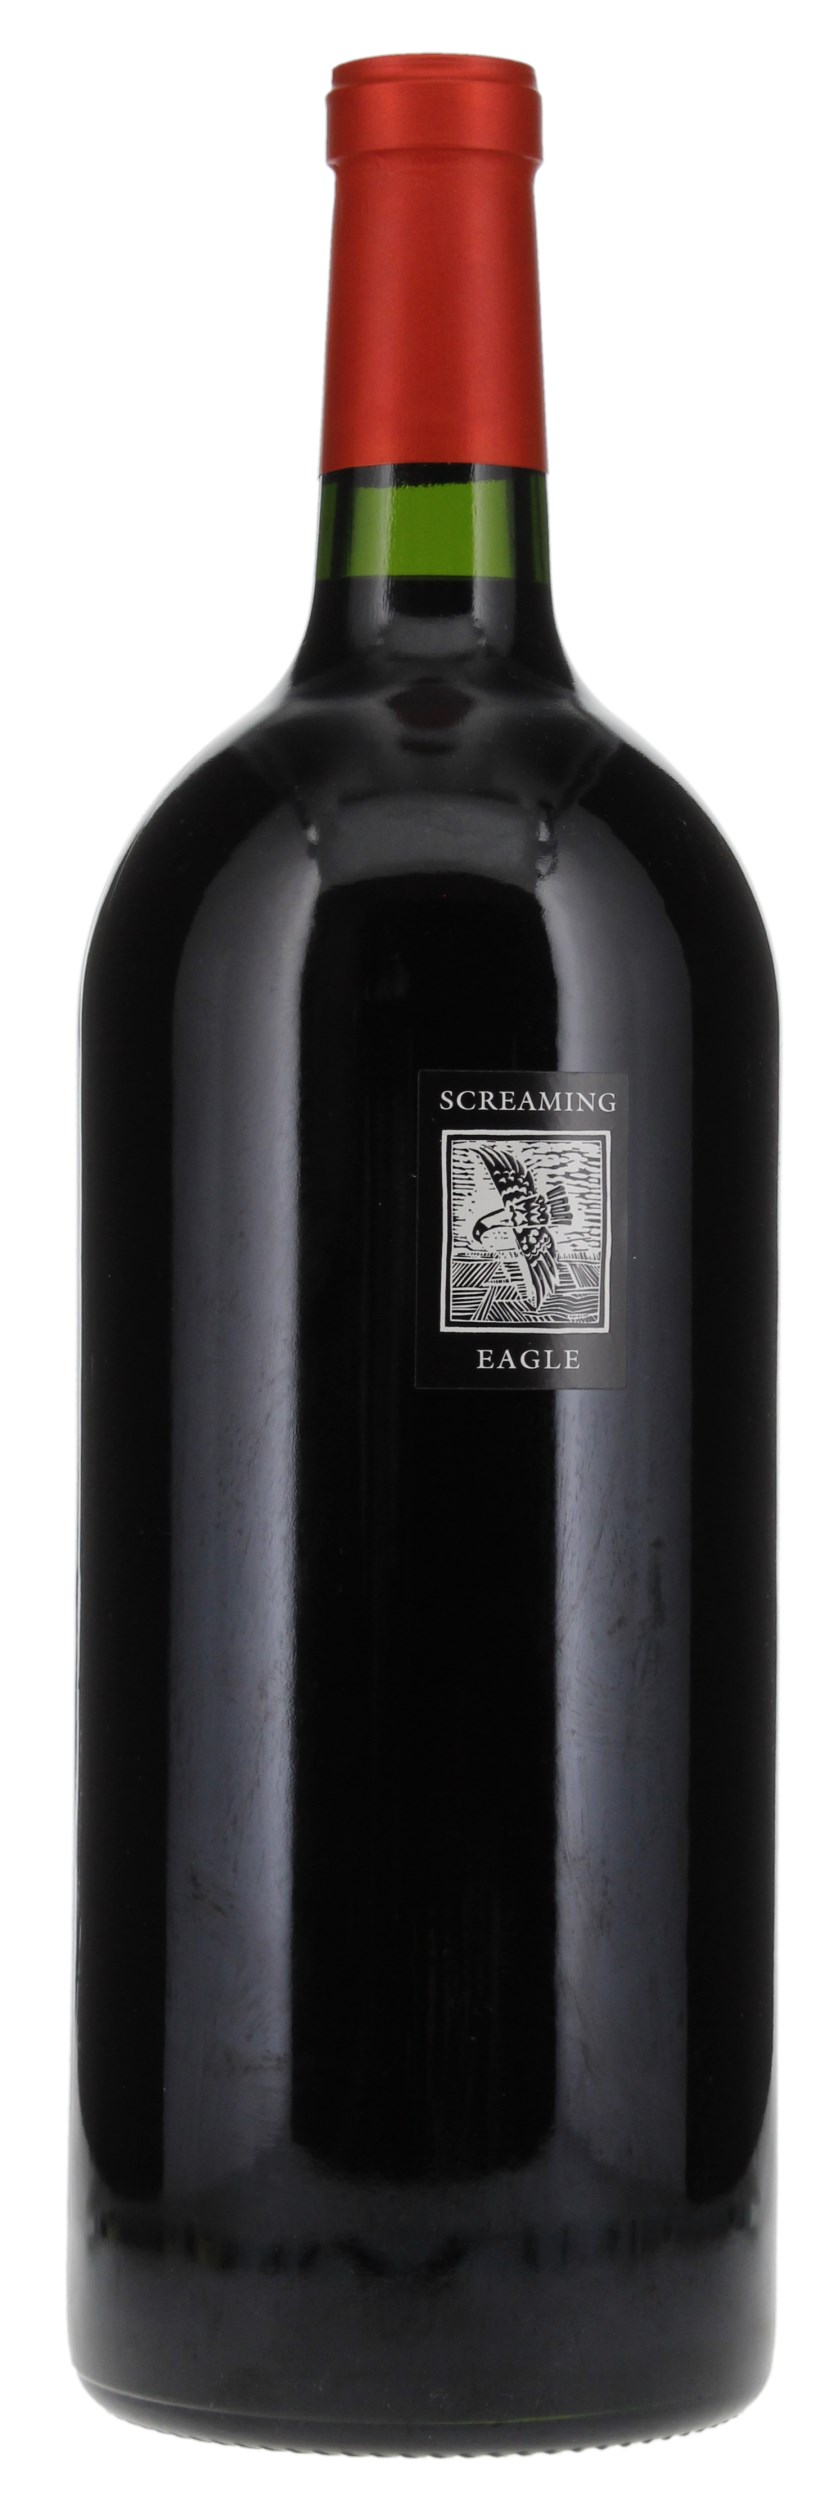 2001 Screaming Eagle Cabernet Sauvignon, 3.0ltr